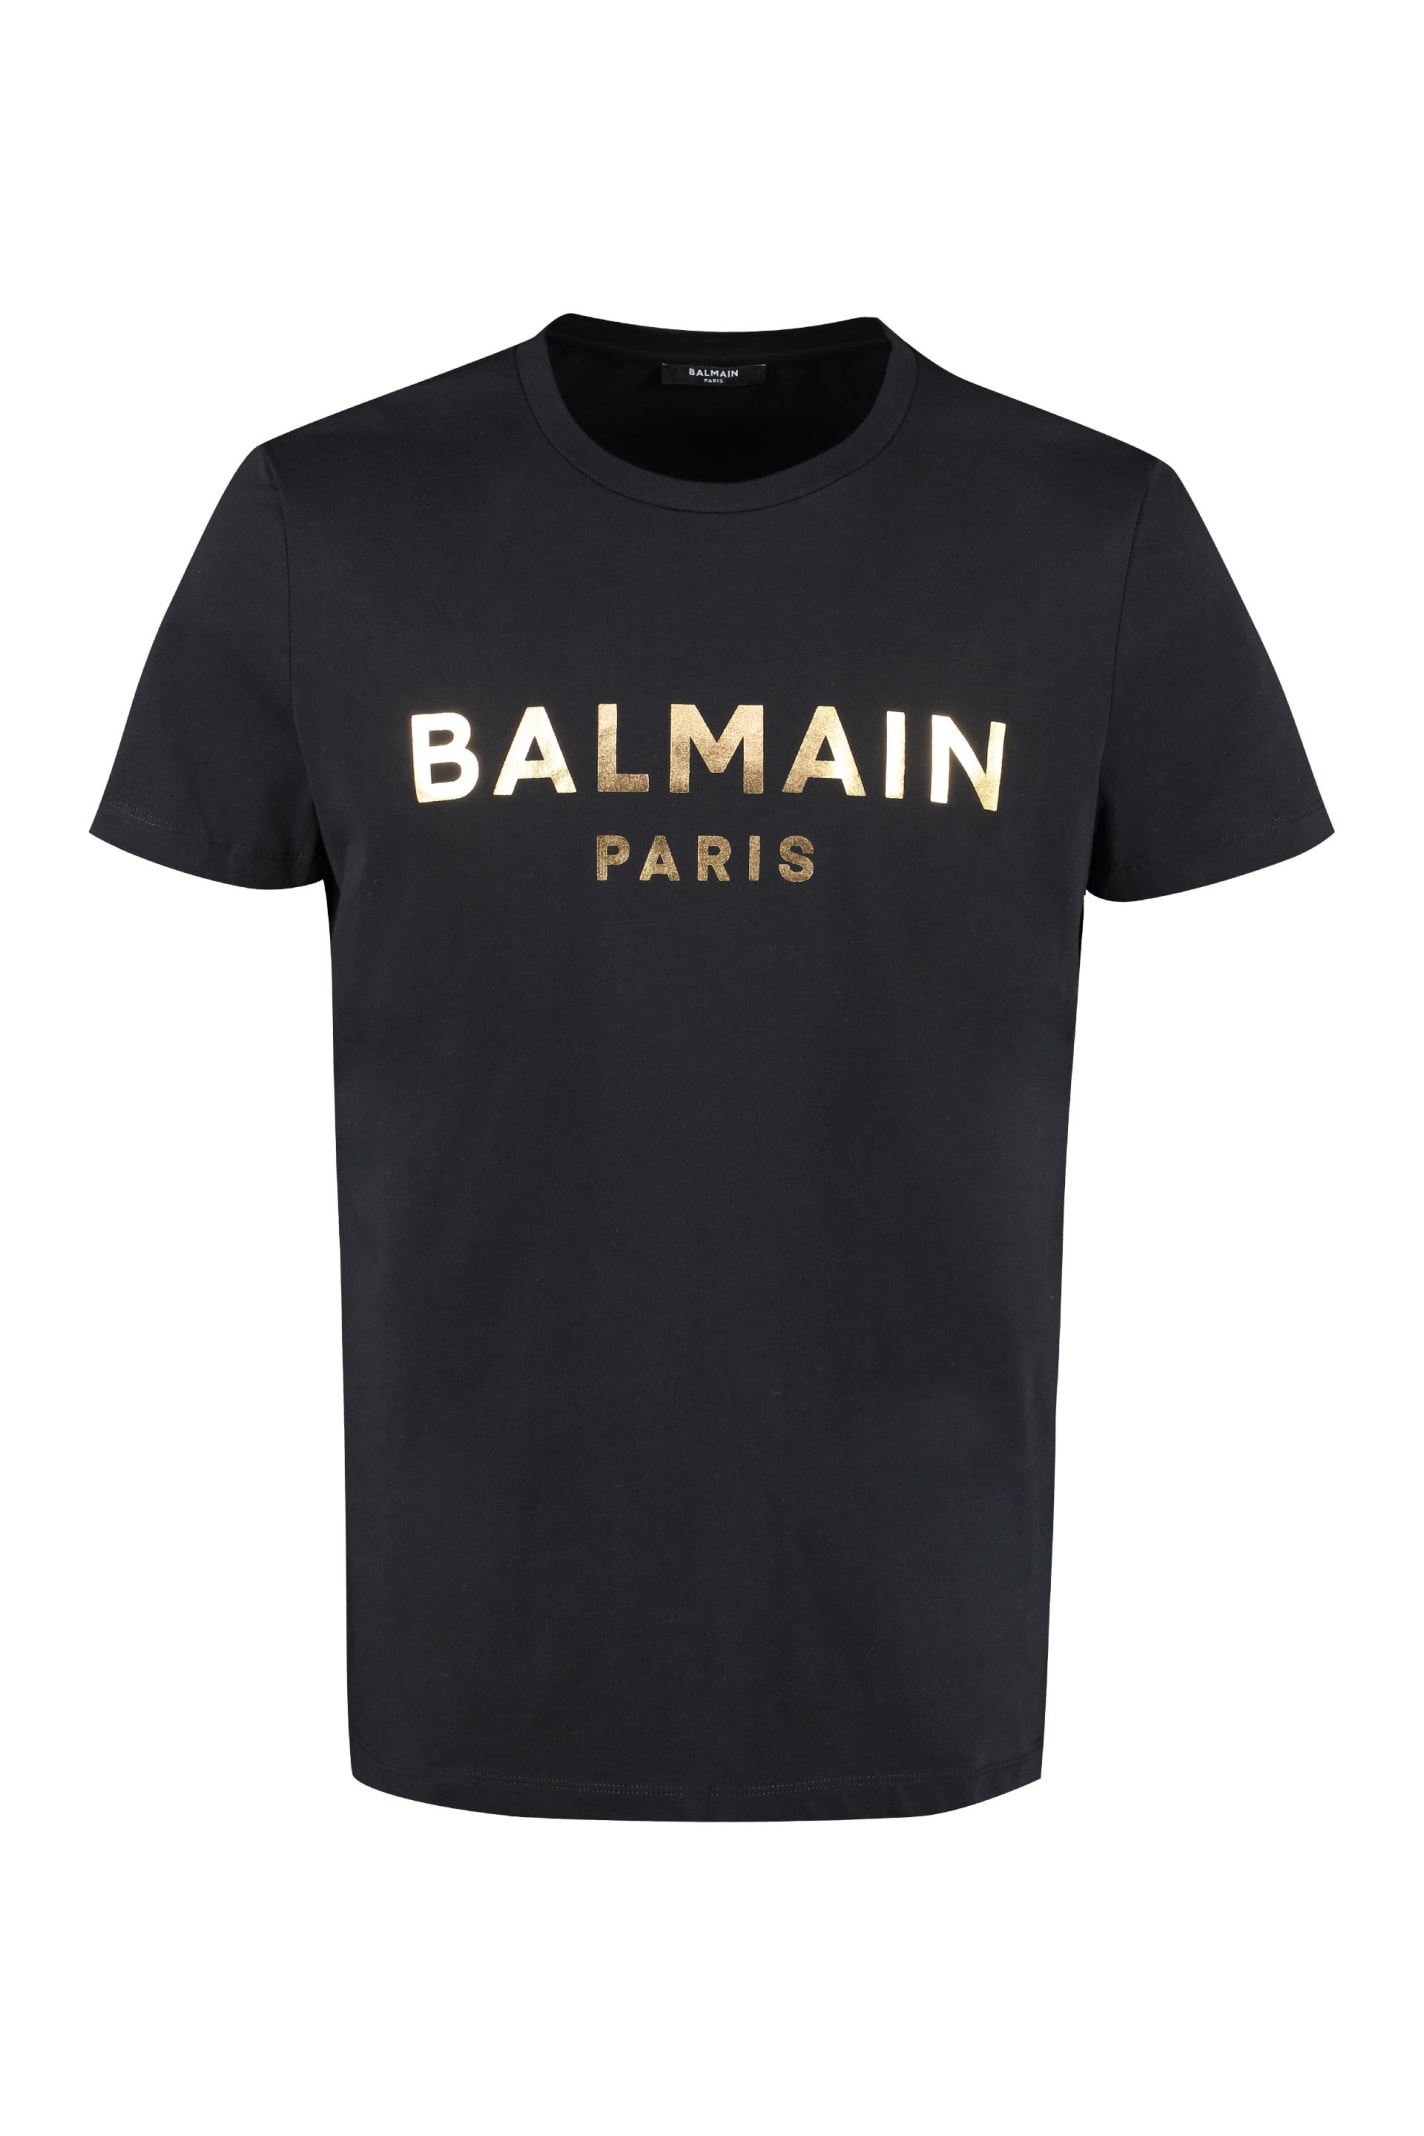 BALMAIN T-Shirts for Men | ModeSens